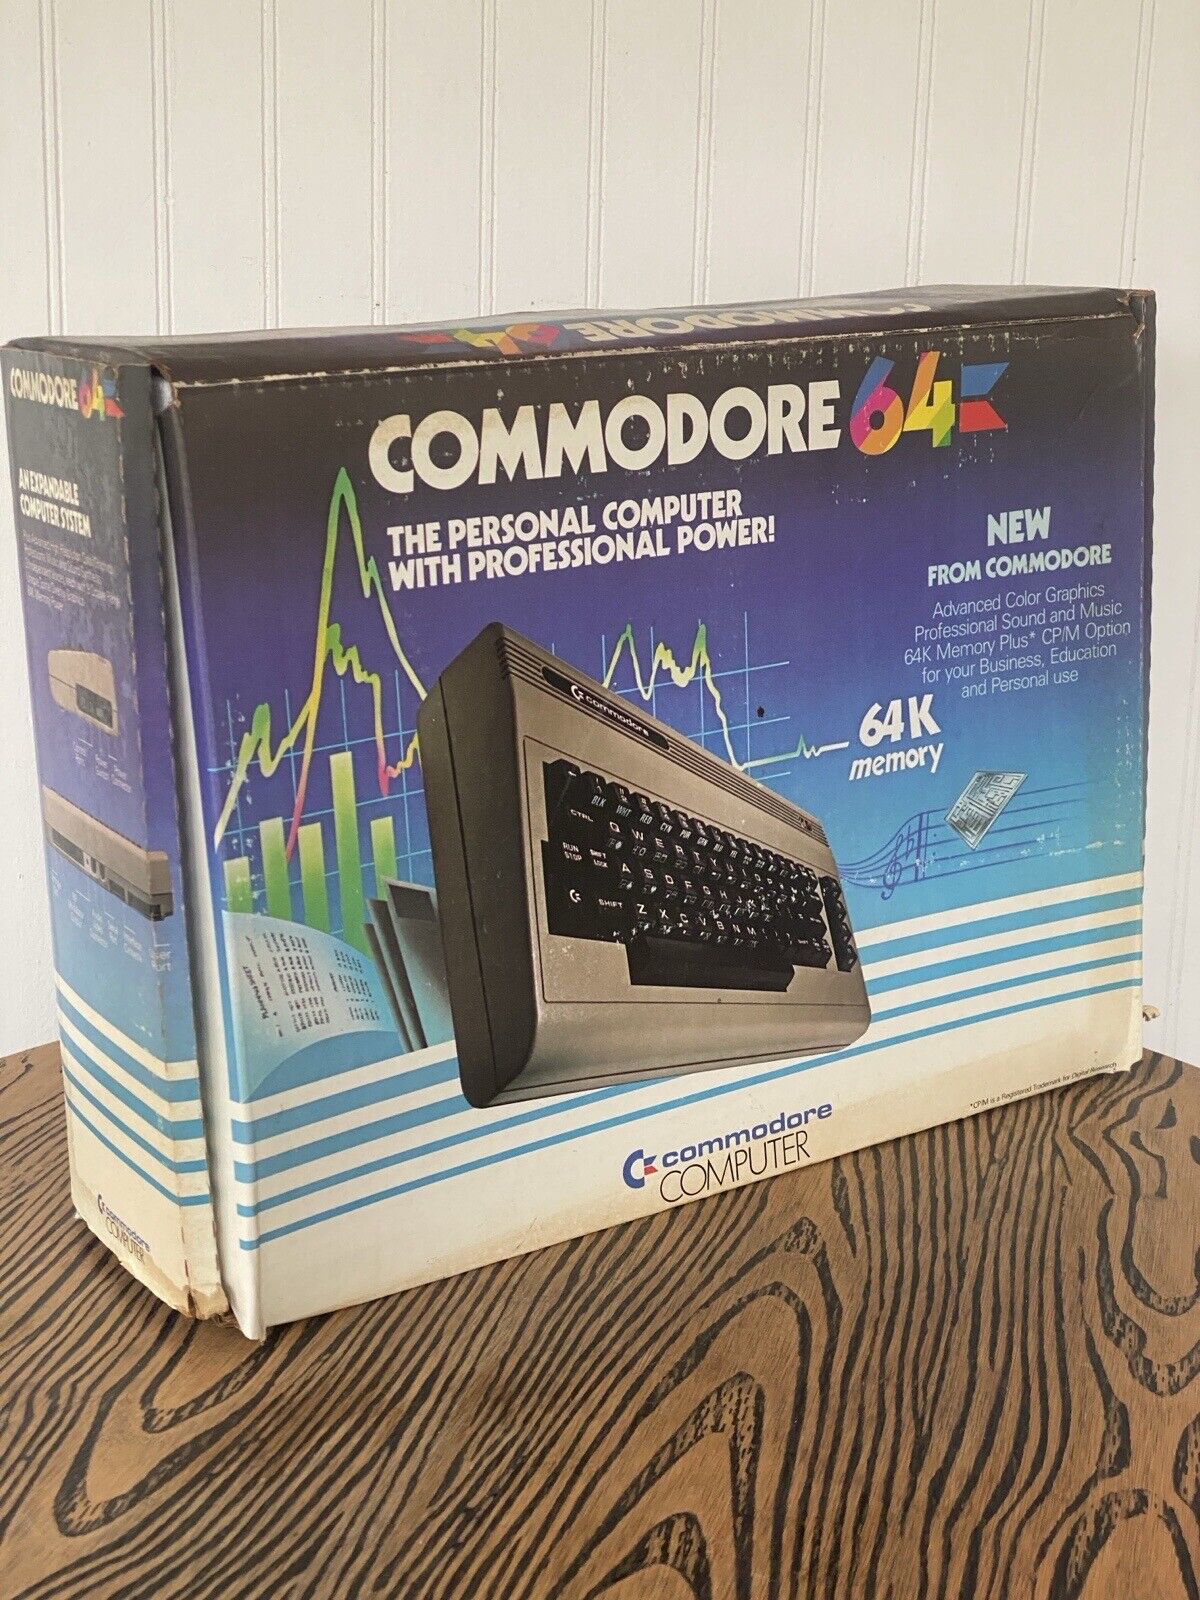 **Commodore 64K Computer W/Original Box/Power Supply/Chords (64K Memory Plus)**